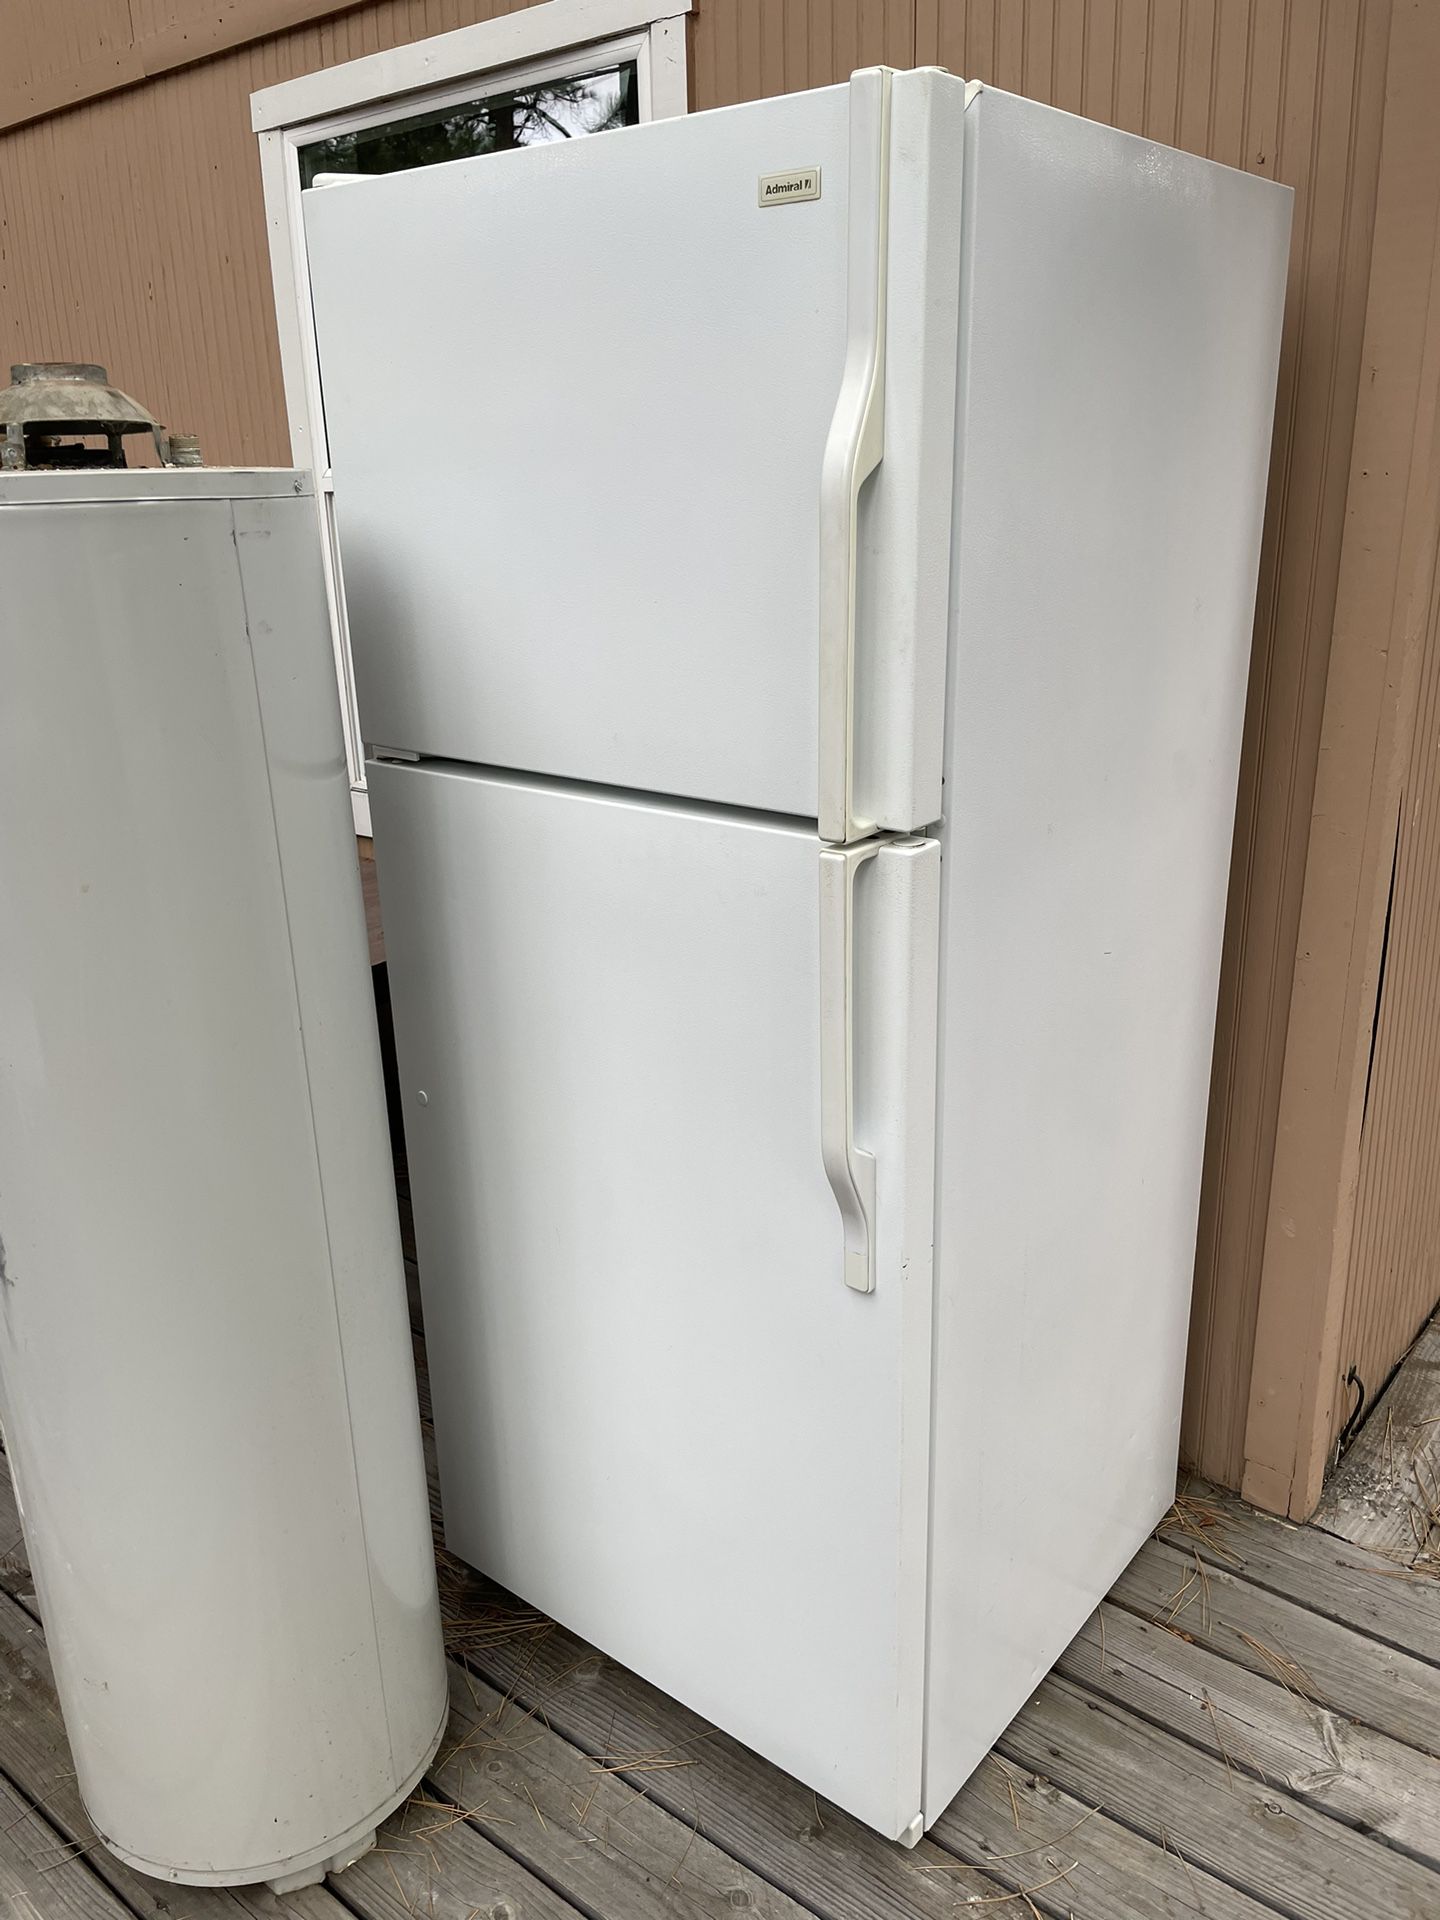 30” refrigerator with freezer